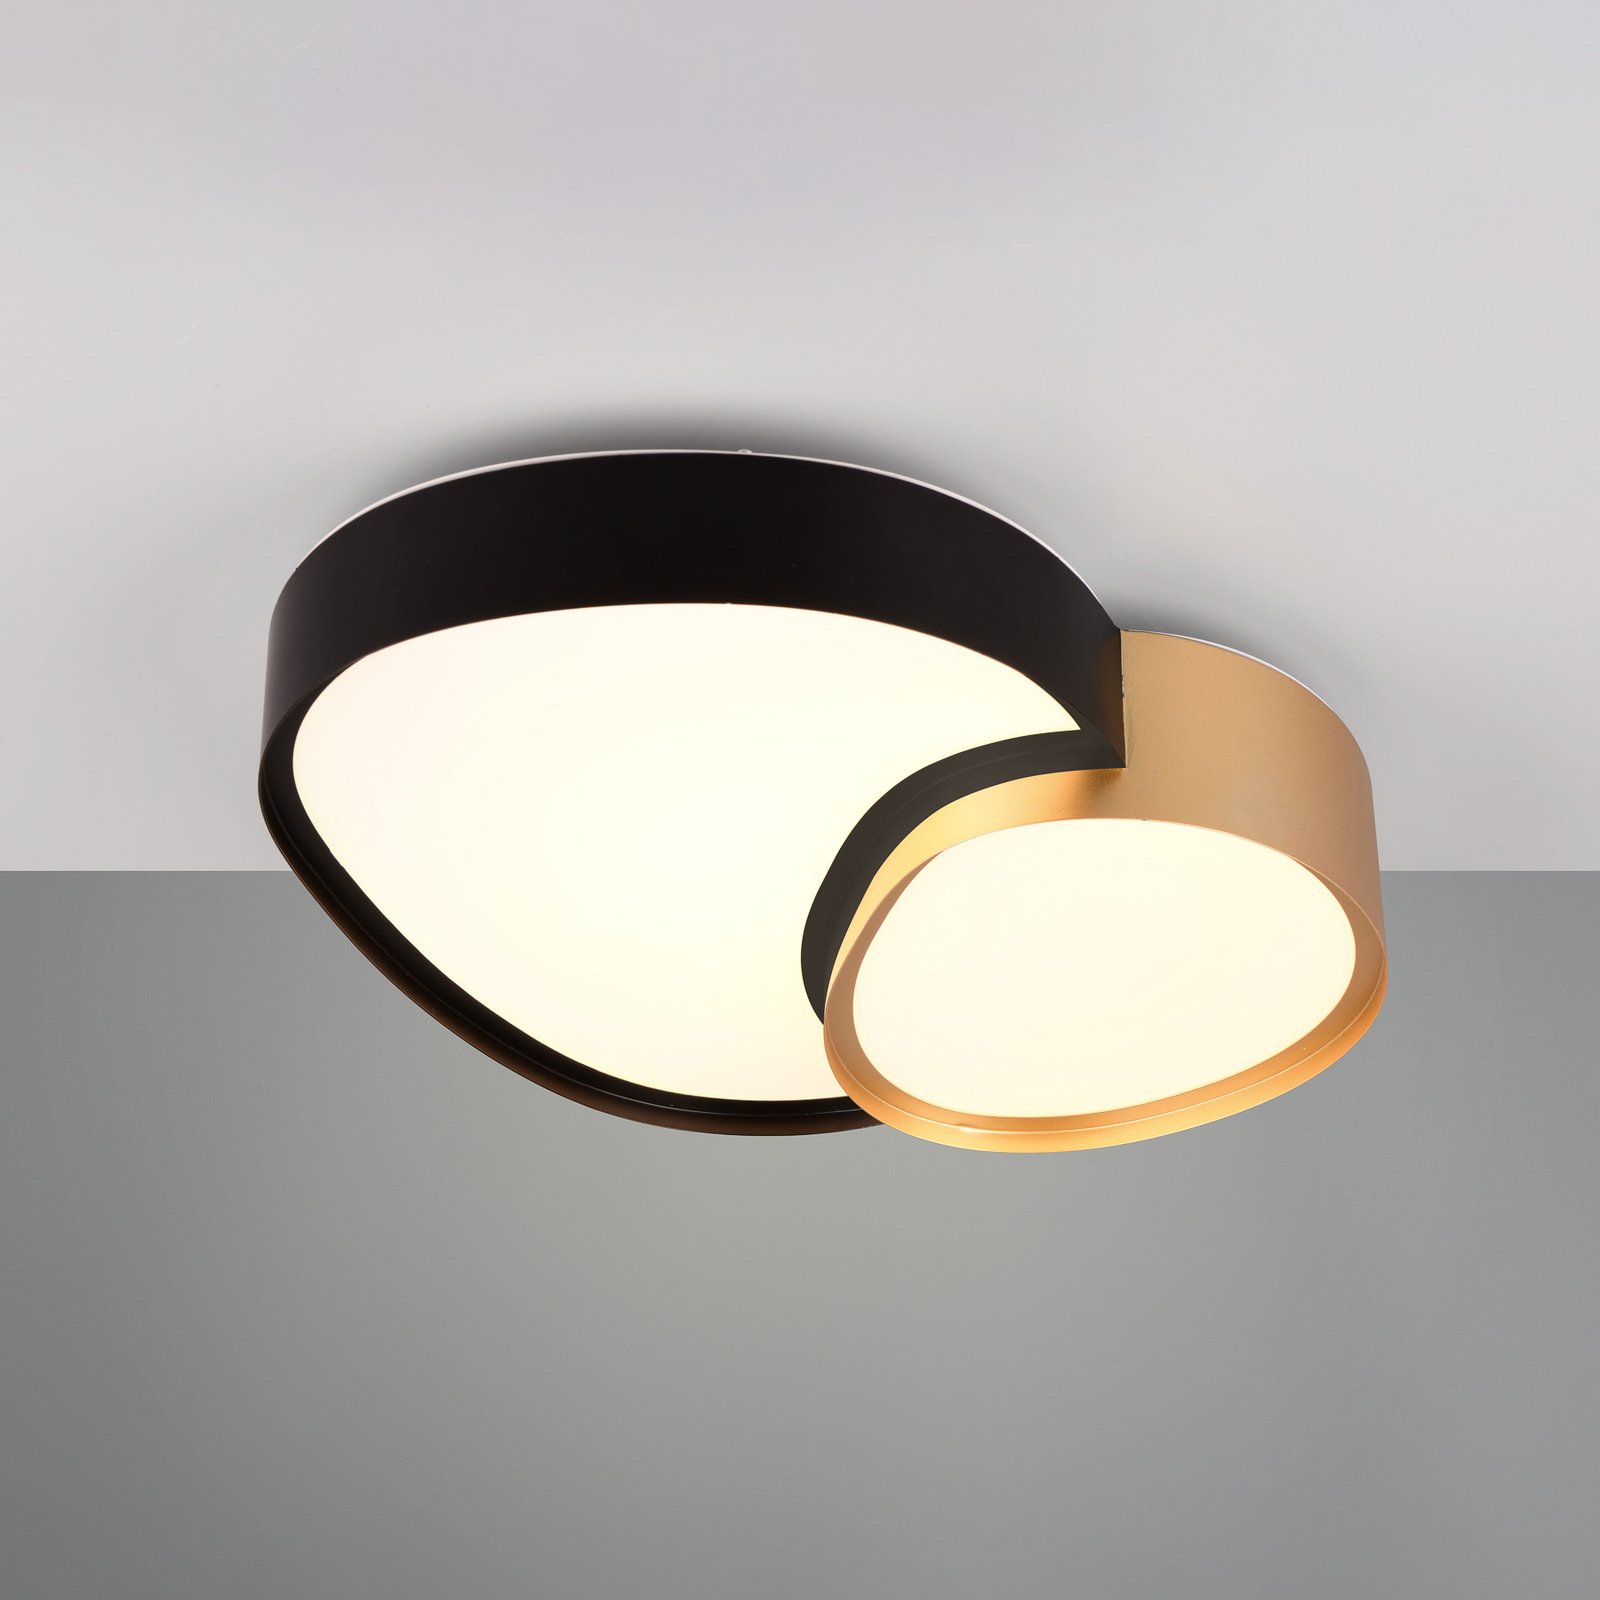 LED-Deckenlampe Rise, schwarz-gold, 43 x 36 cm, CCT, dimmbar